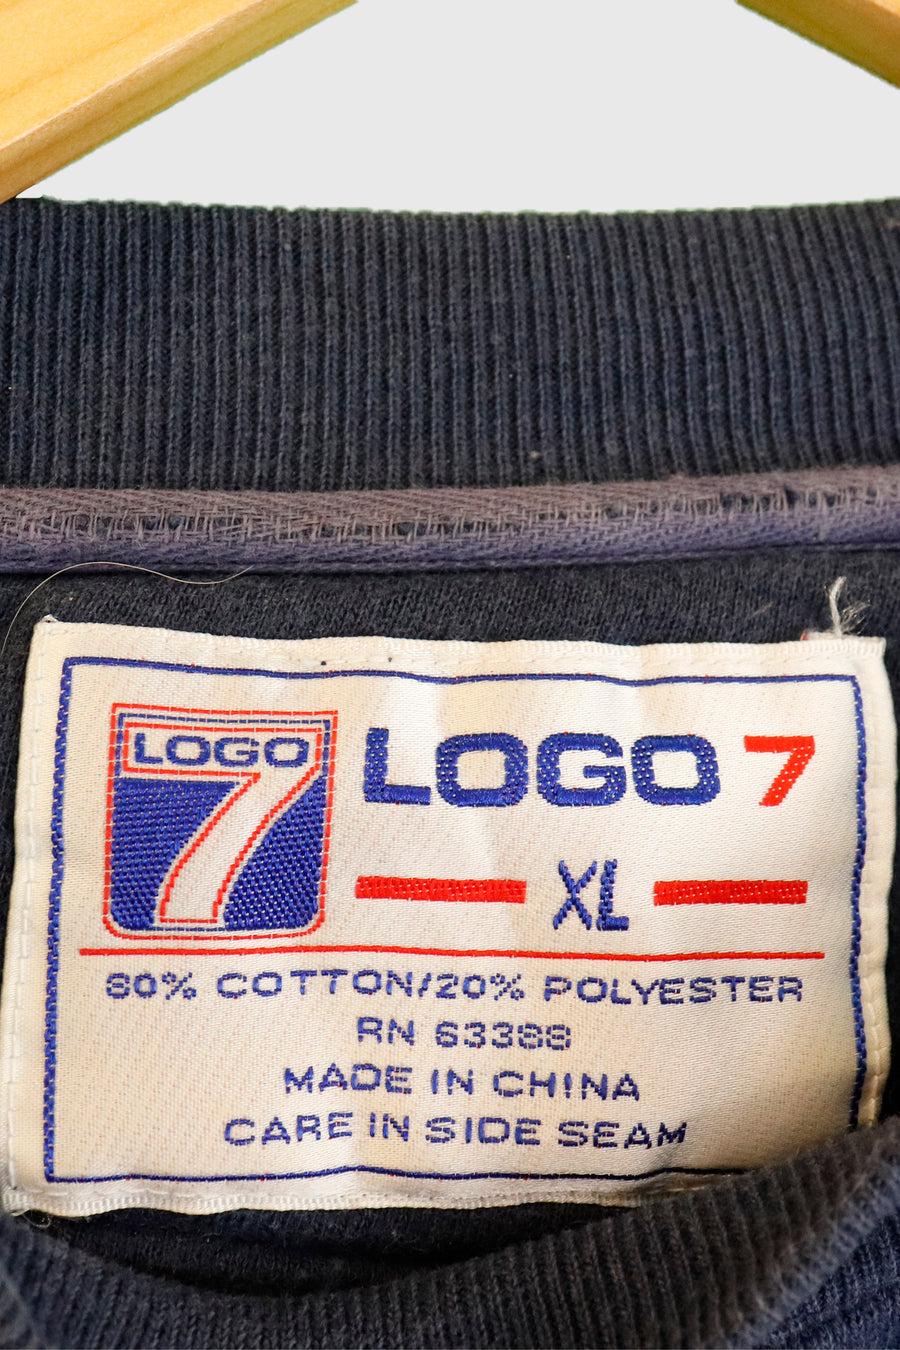 Vintage Logo 7 Syracuse Embroidered Sweatshirt Sz XL